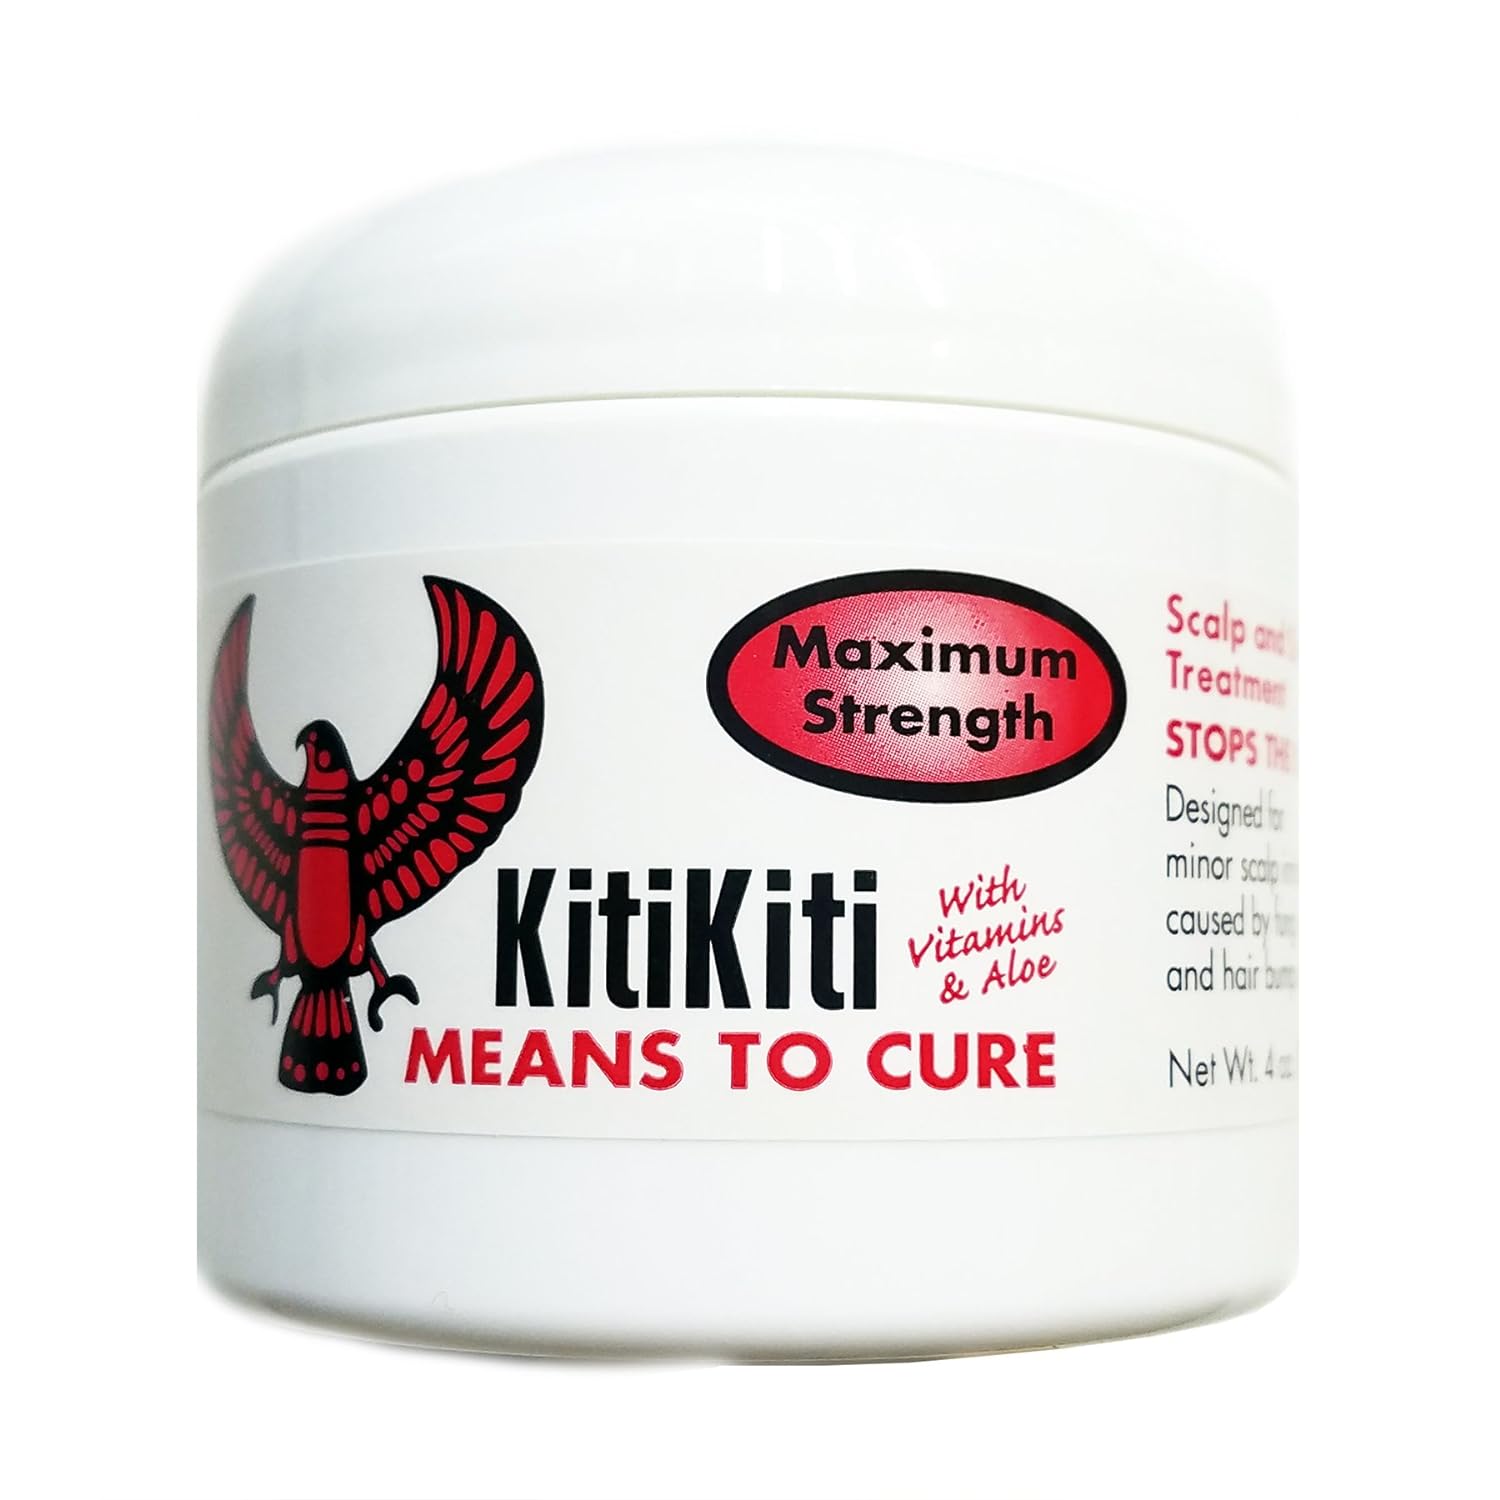 Kitikiti Scalp & Skin Treatment Means to Cure Maximum Strength